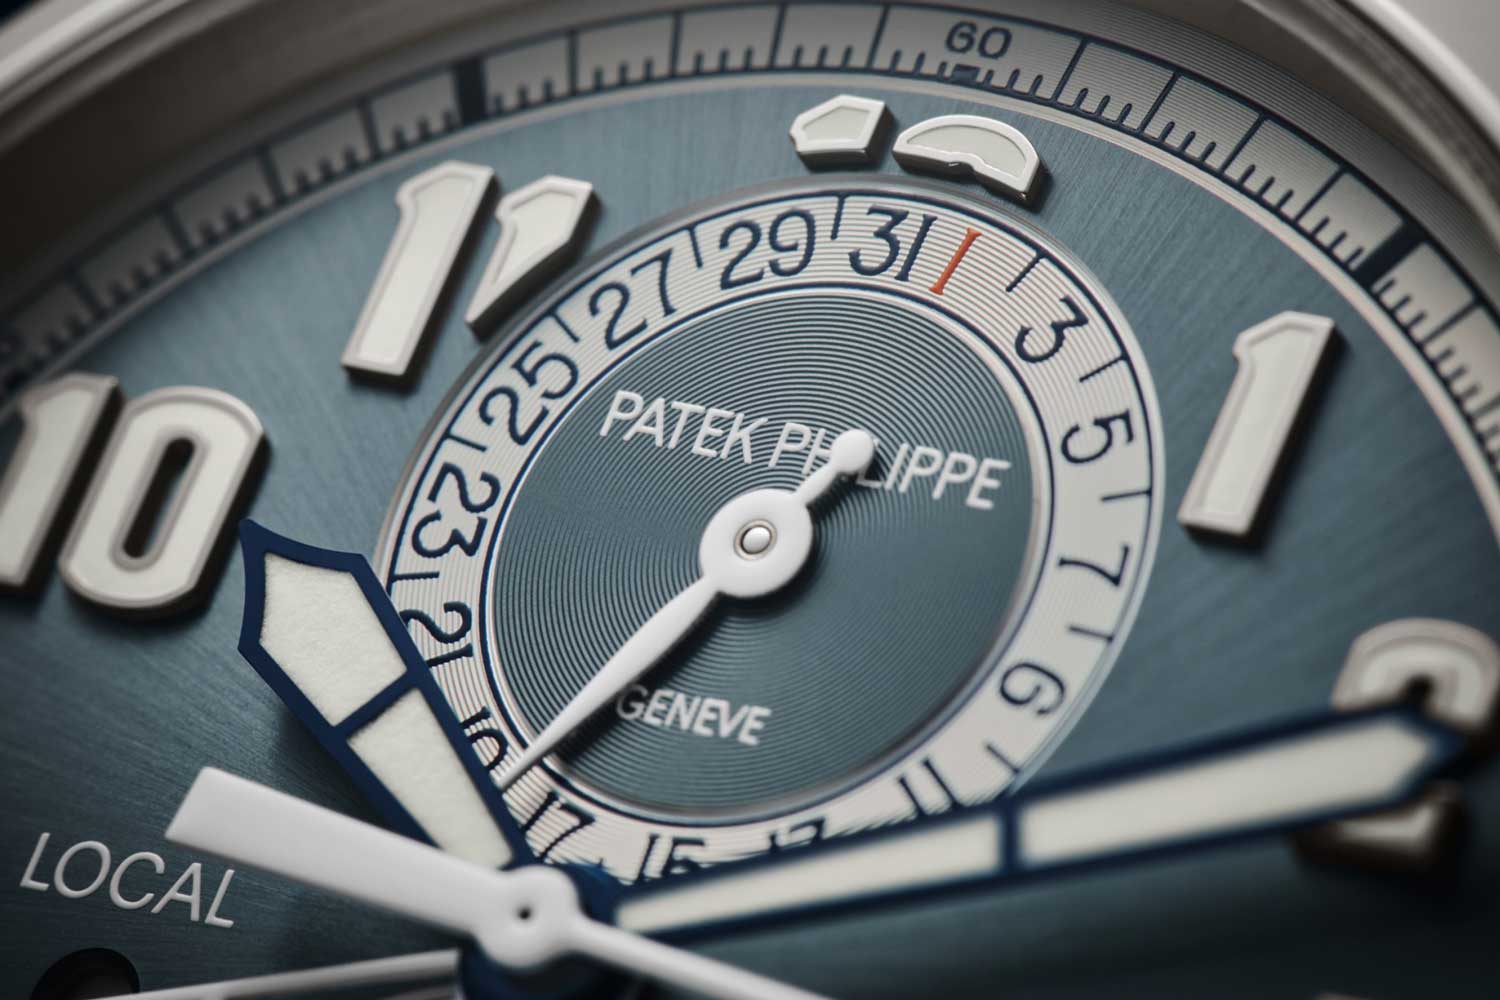 Patek Philippe Calatrava Pilot Travel Time Chronograph Ref. 5924G